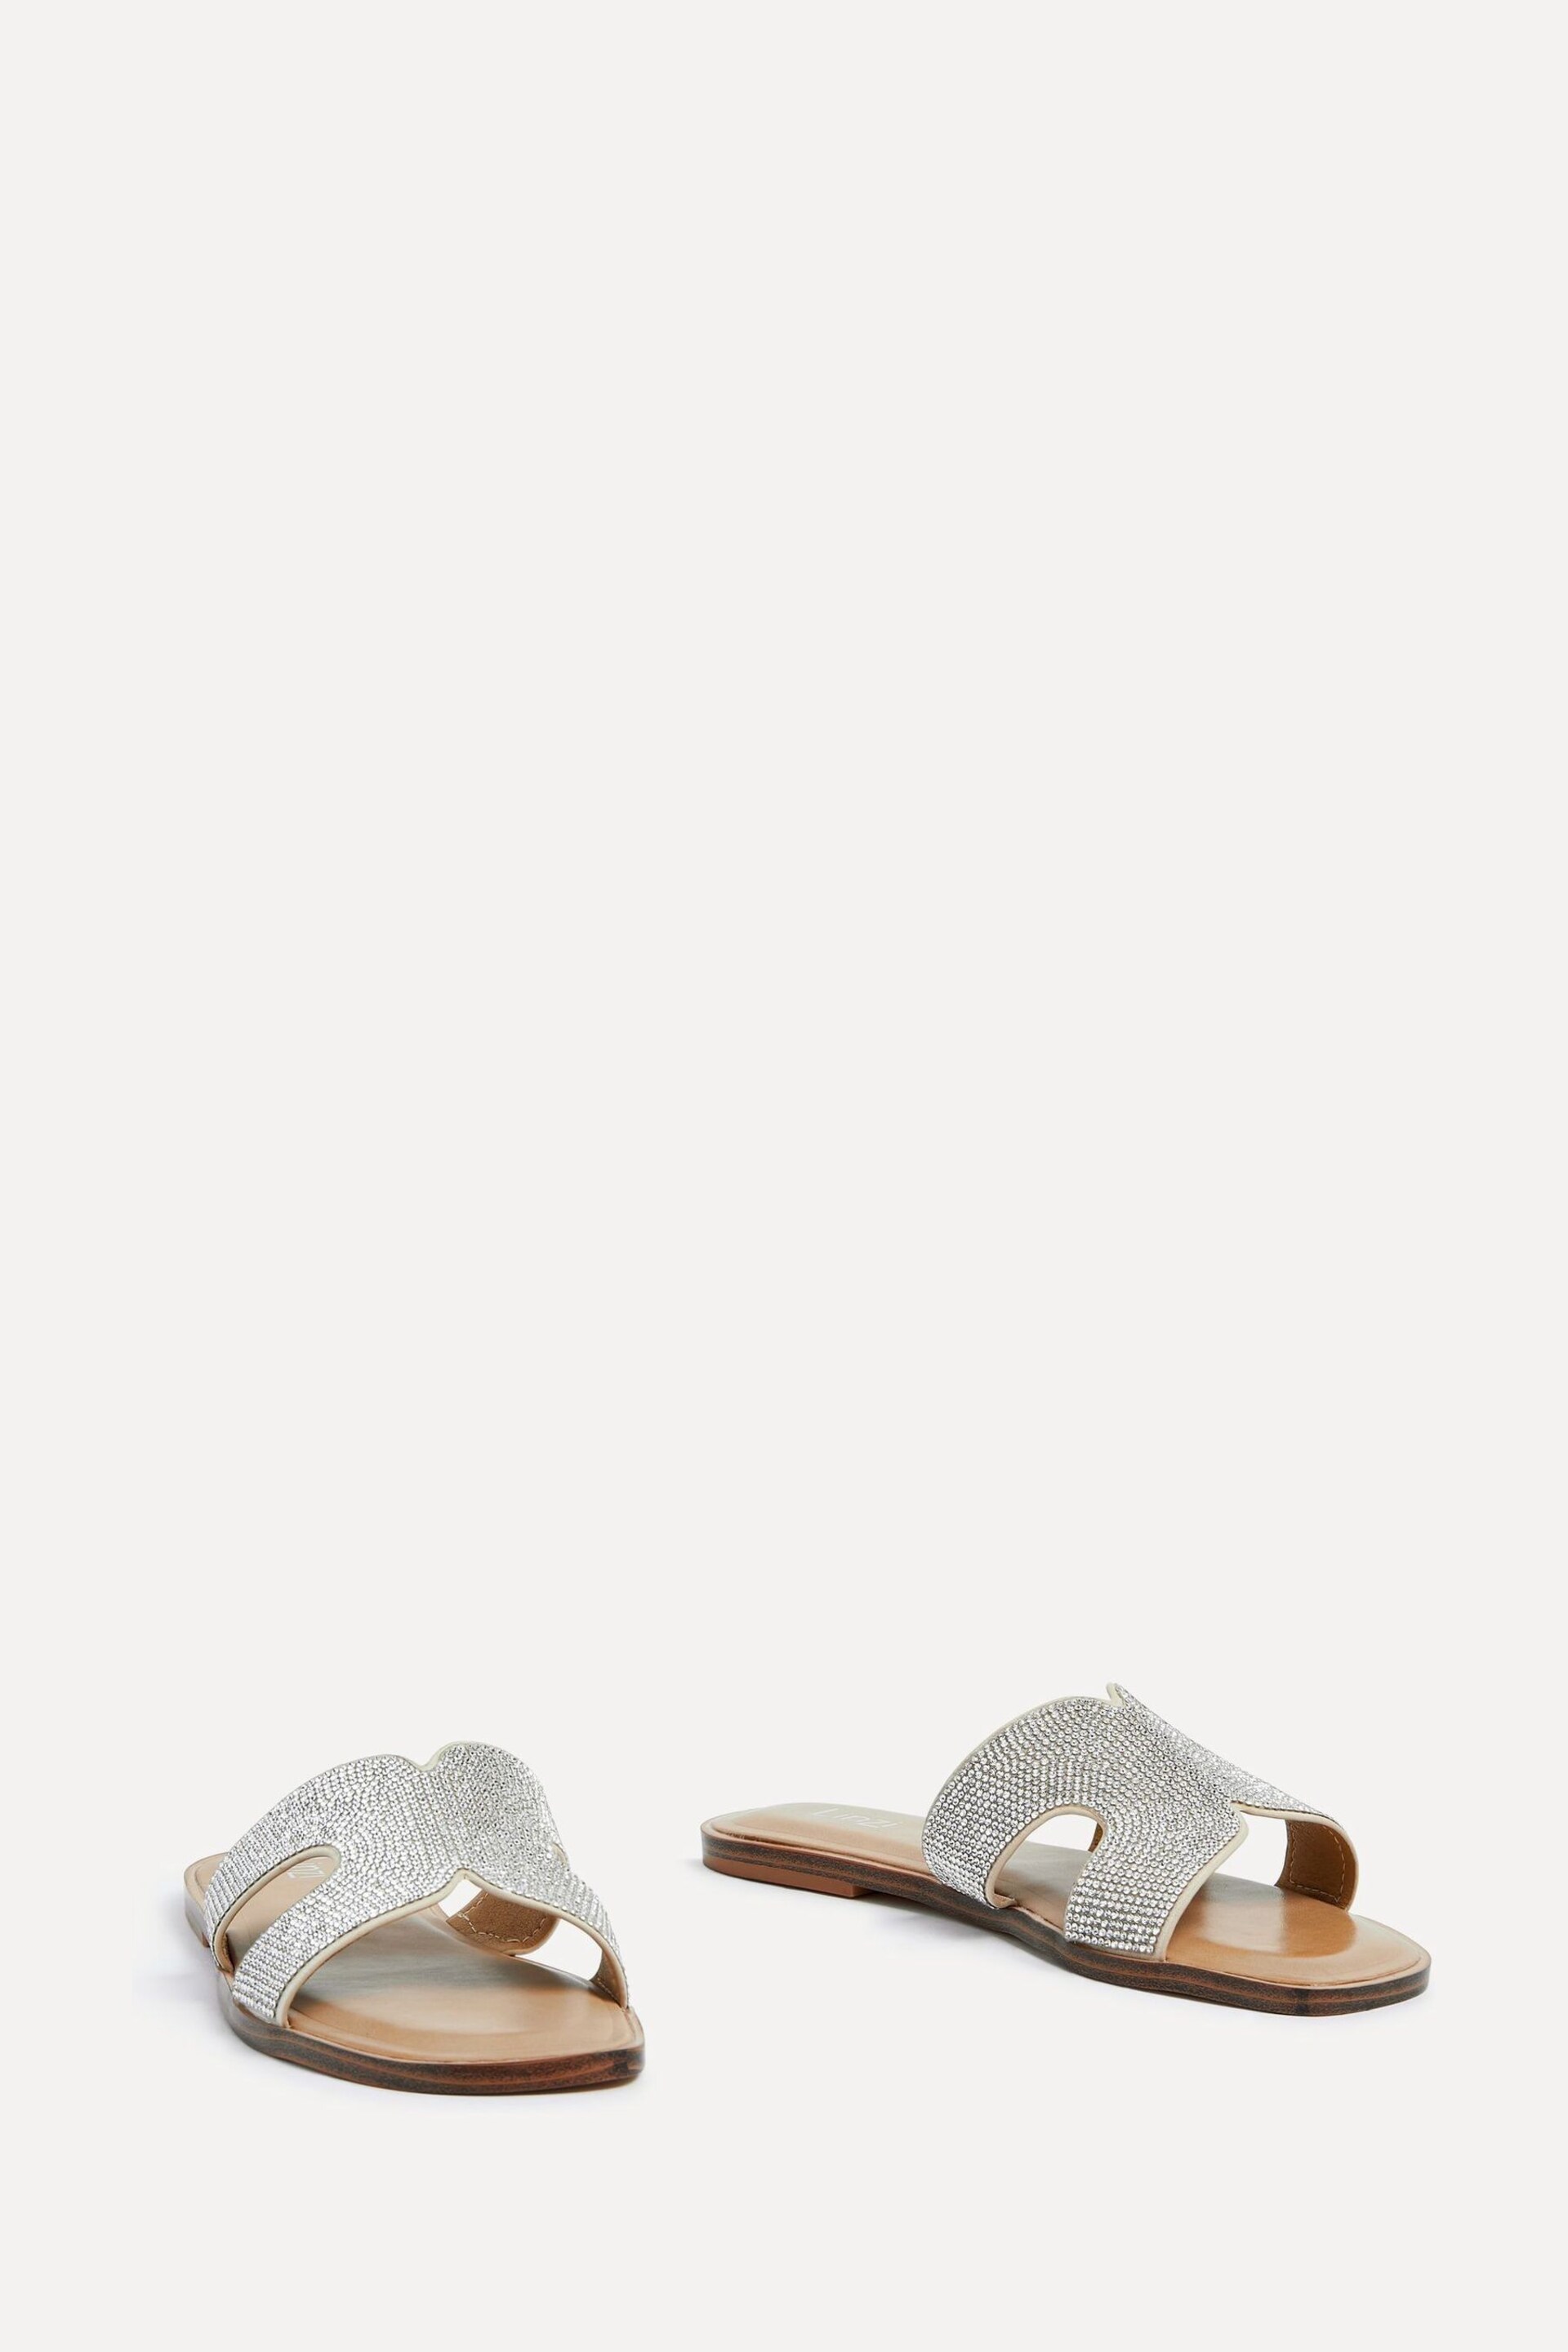 Linzi Silver Becca Diamante Embellished Flat Sandals - Image 4 of 6